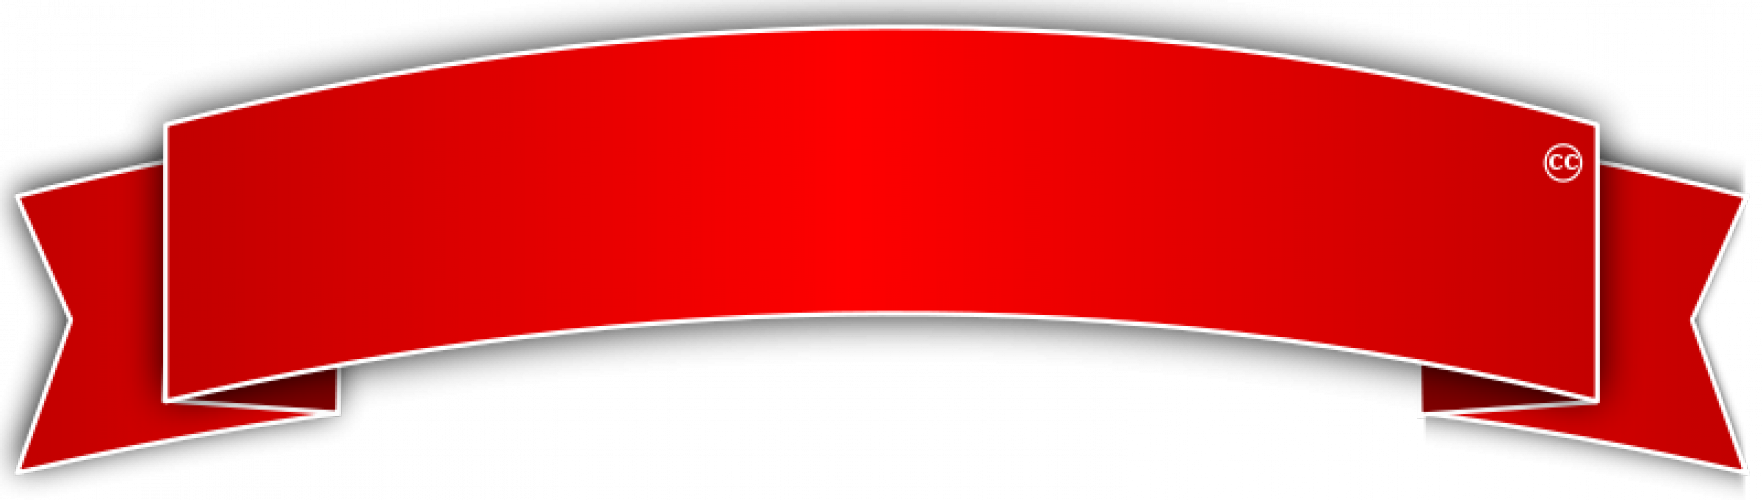 Red banner vector image | Public domain vectors